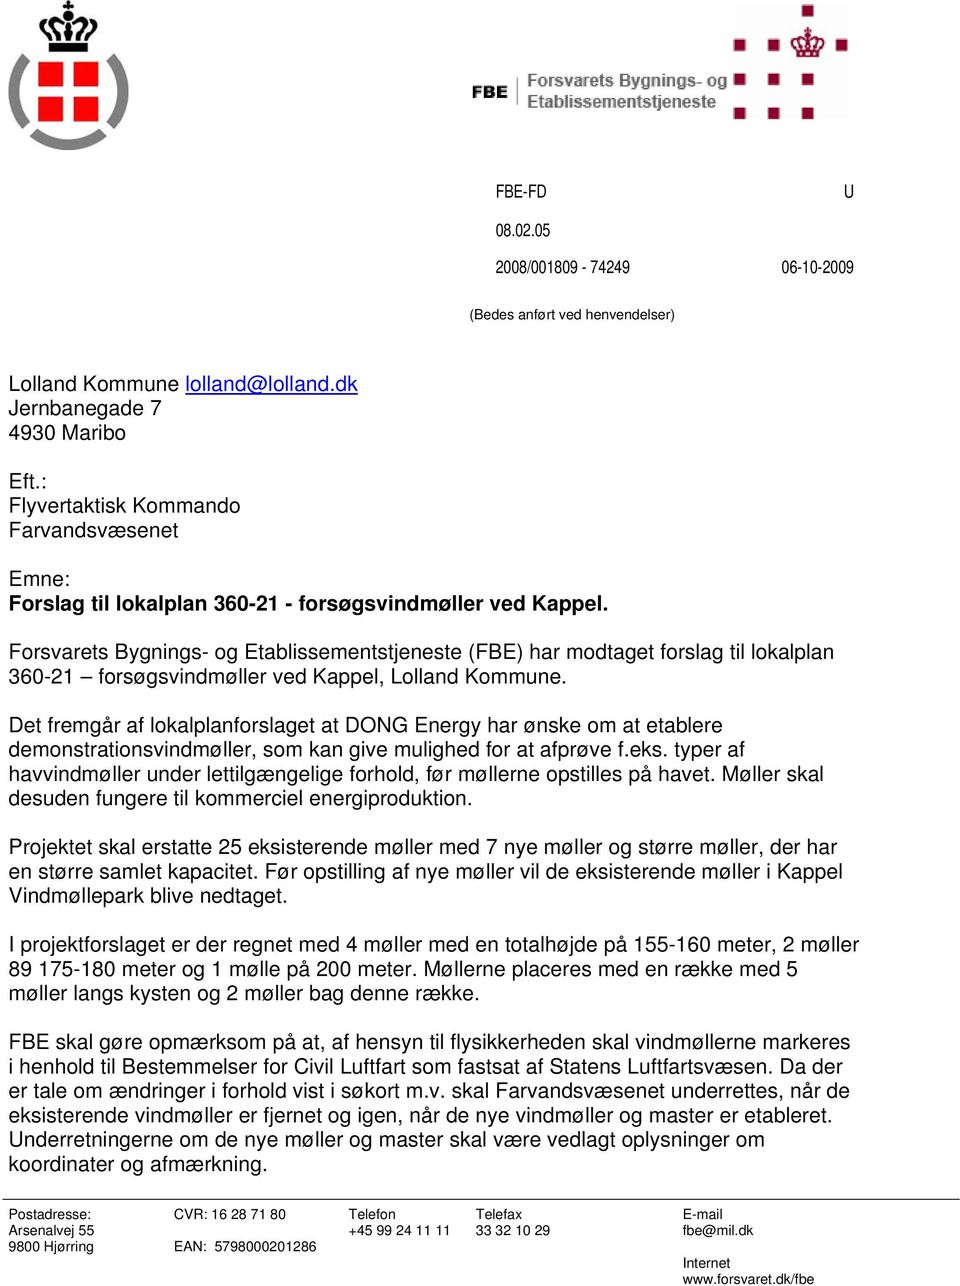 Forsvarets Bygnings- og Etablissementstjeneste (FBE) har modtaget forslag til lokalplan 360-21 forsøgsvindmøller ved Kappel, Lolland Kommune.